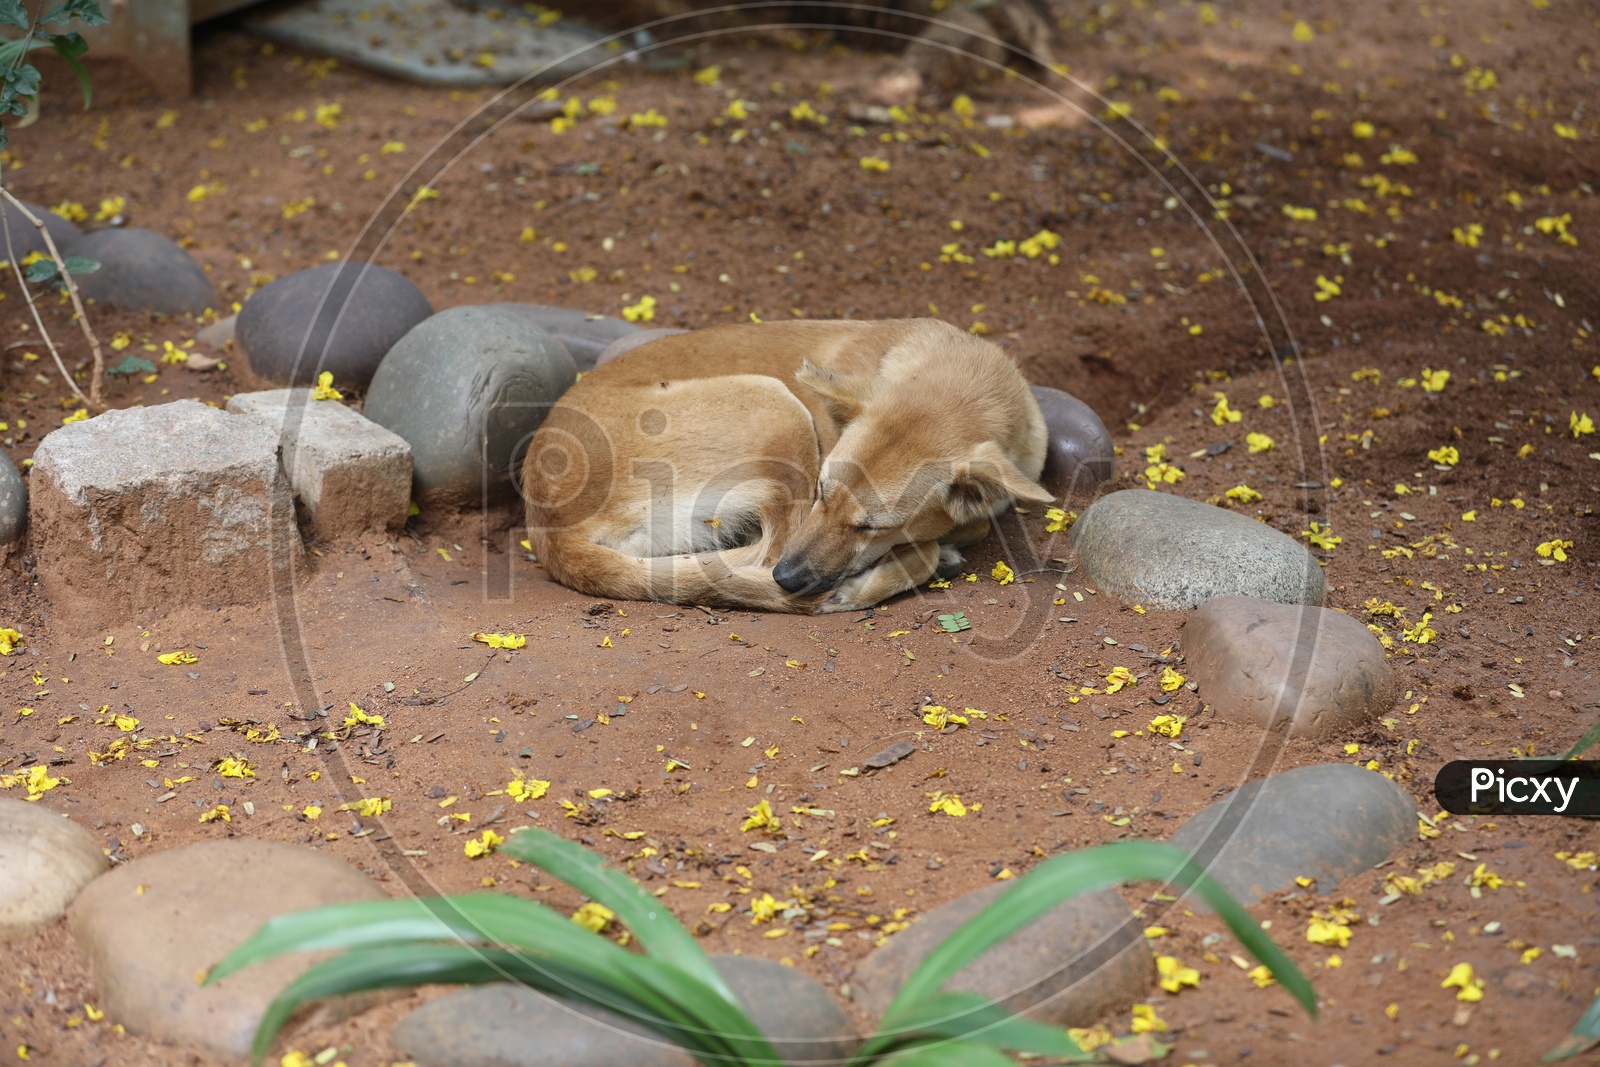 A stray dog sleeping alongside the stones